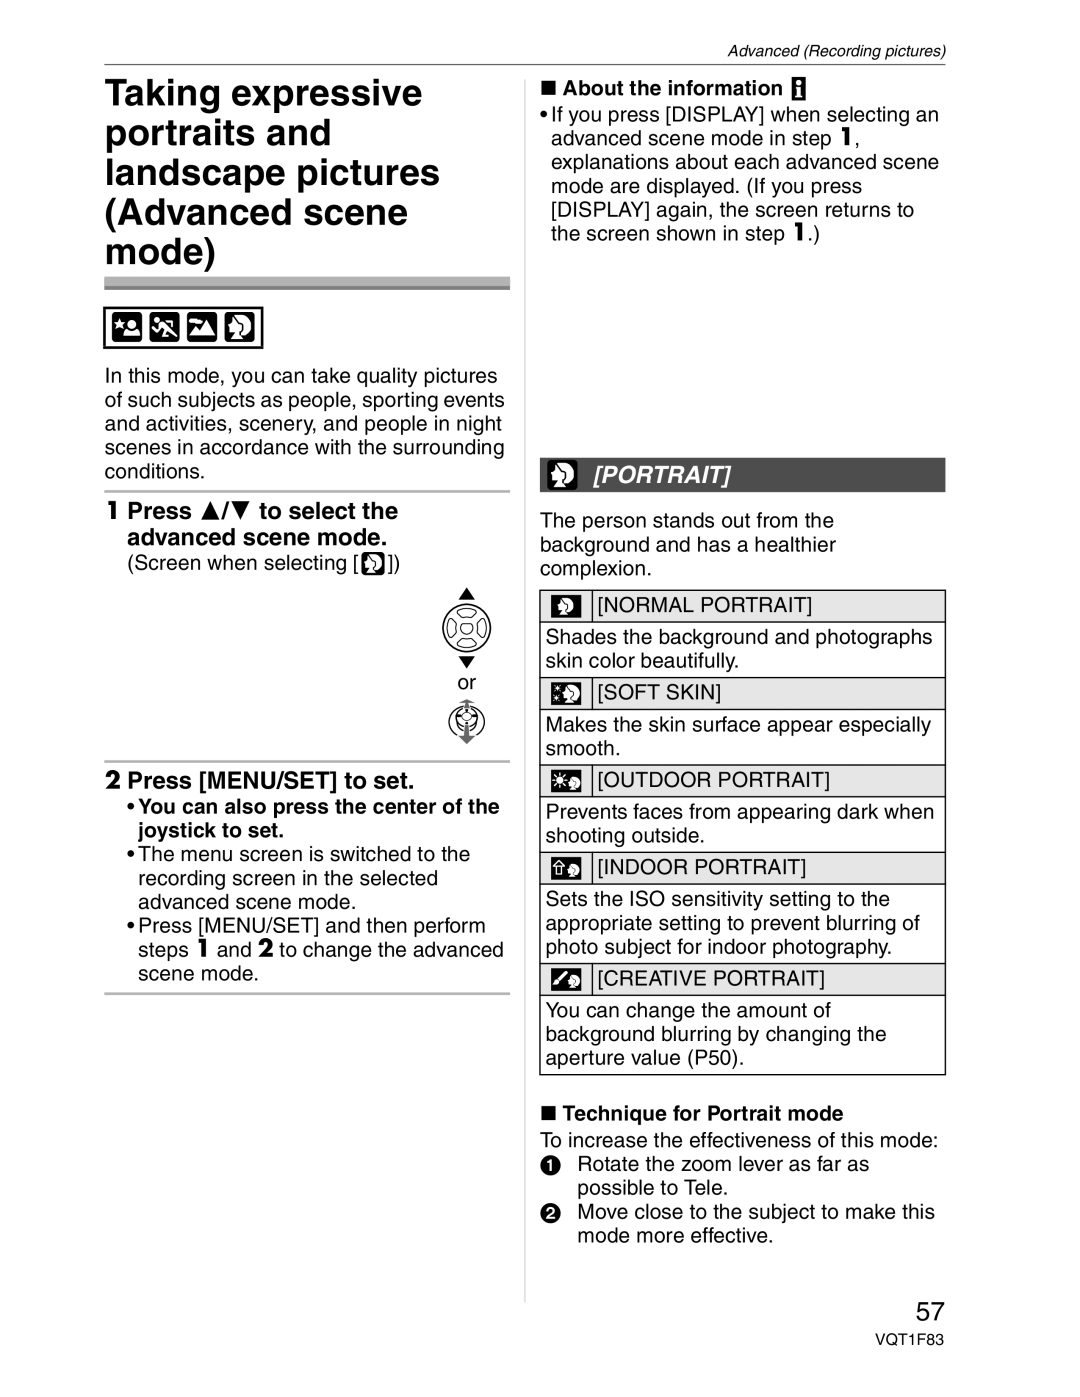 Panasonic DMC-FZ18 Press / to select the advanced scene mode, About the information, Technique for Portrait mode 